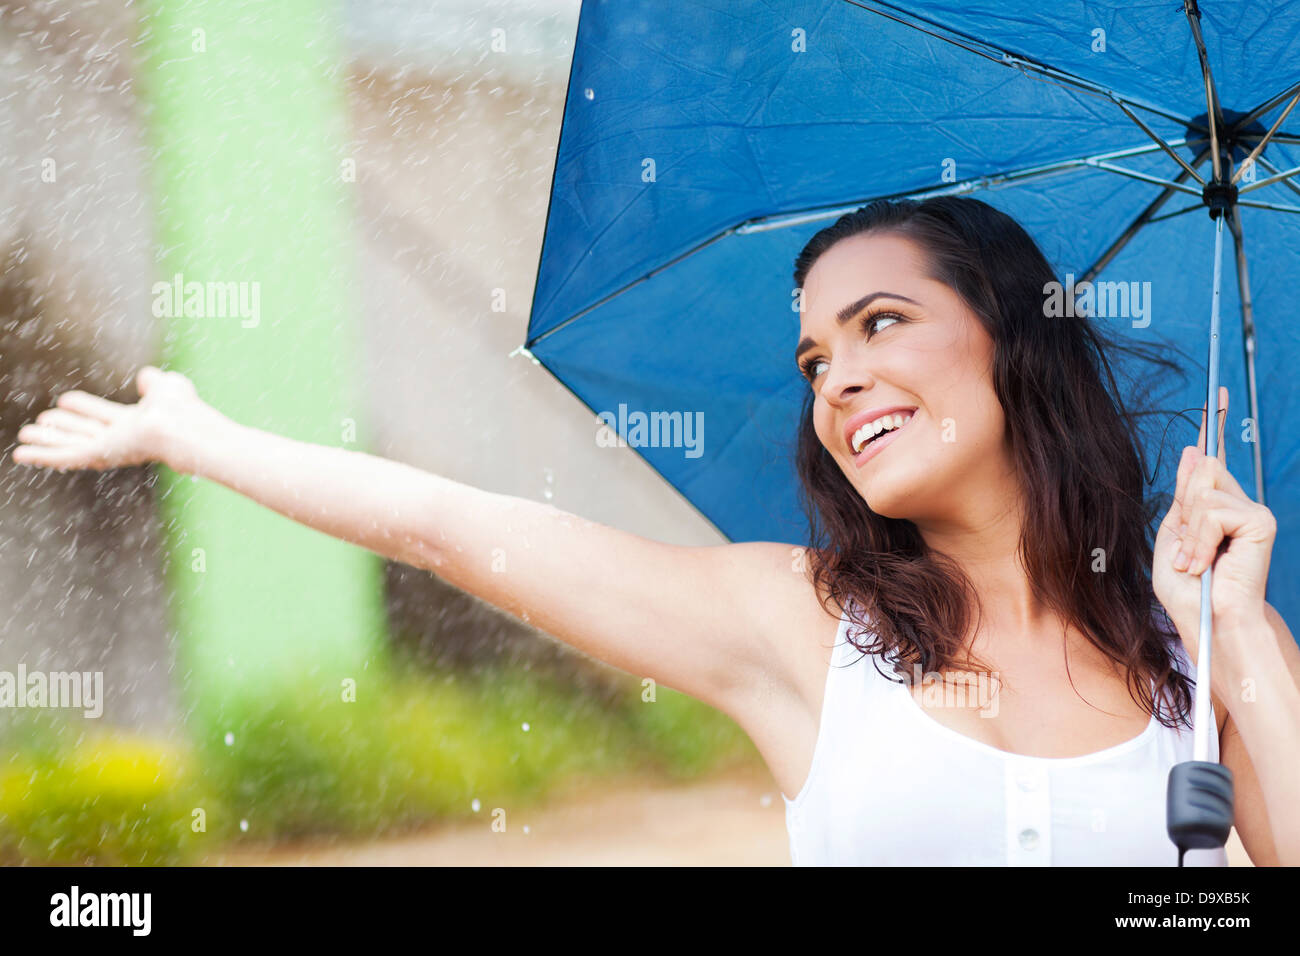 attractive young woman having fun in the rain Stock Photo